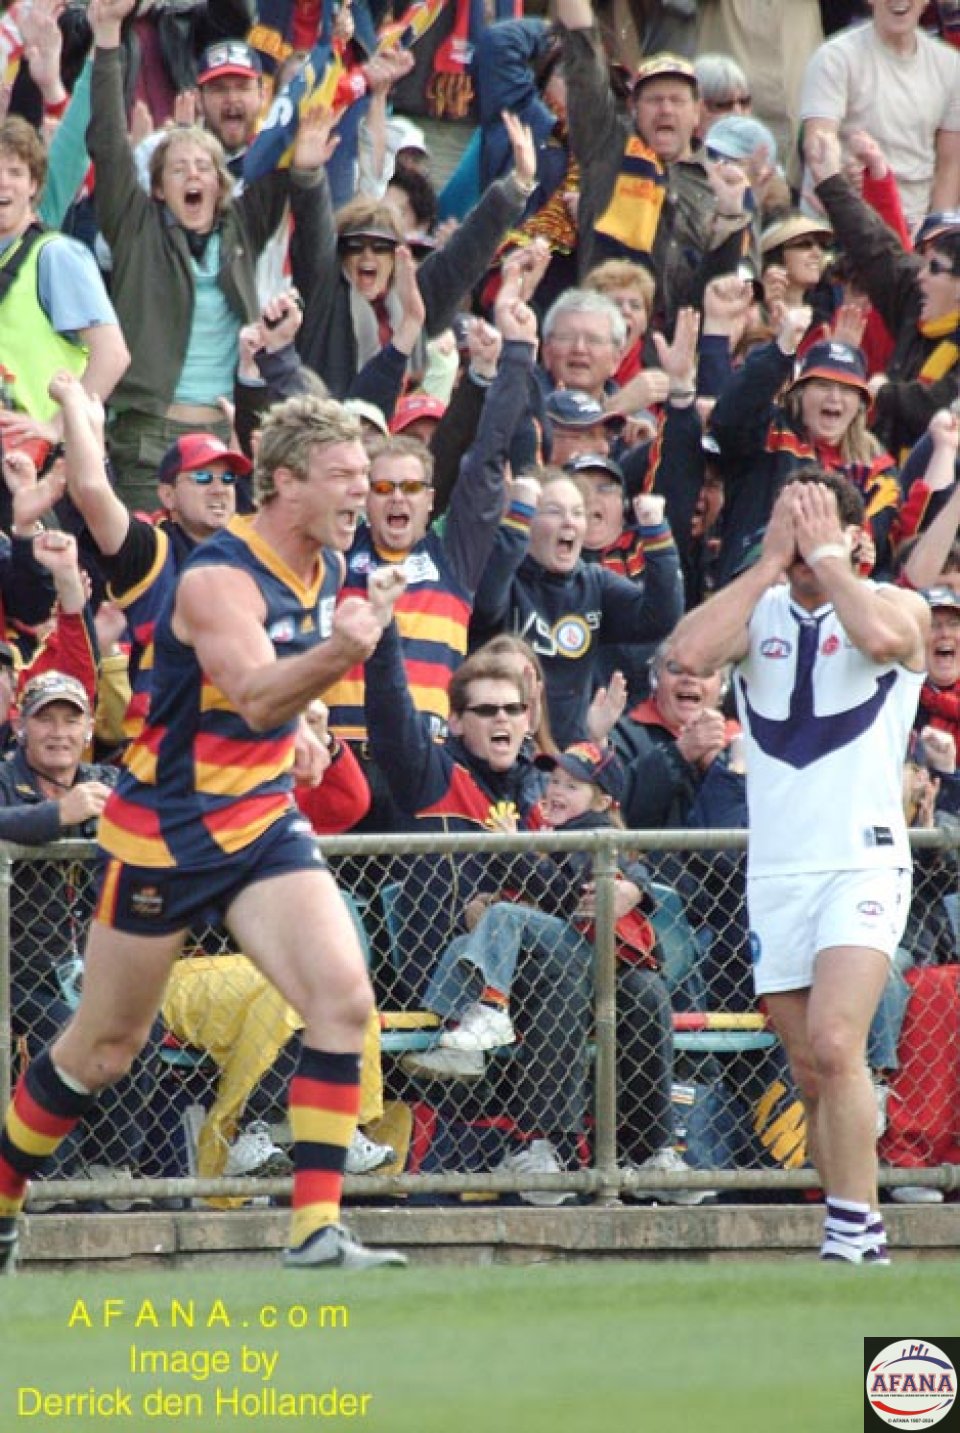 [b]Crows ruckman Rhett Biglands celebrates a miraculous goal against the Fremantle Dockers[/b]